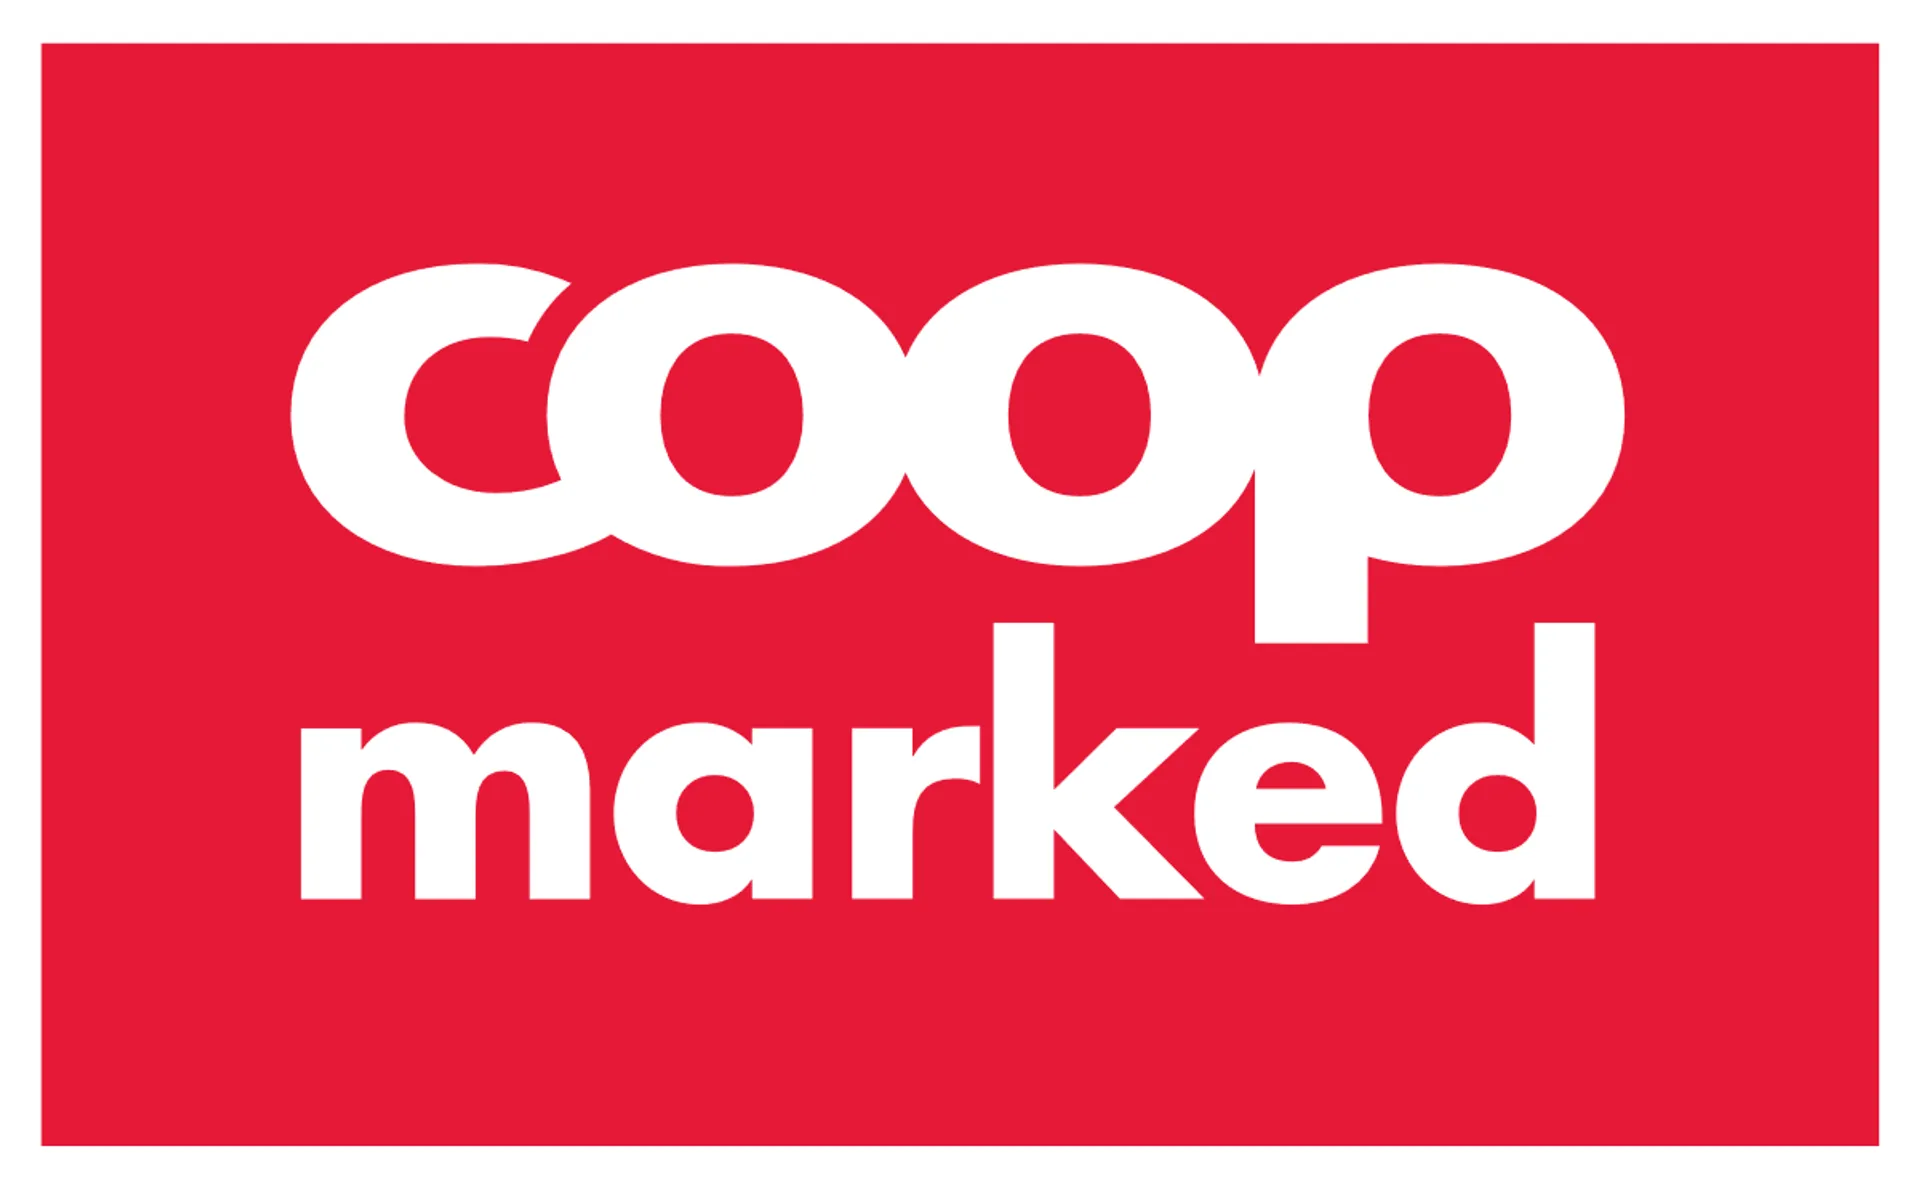 COOP MARKED logo